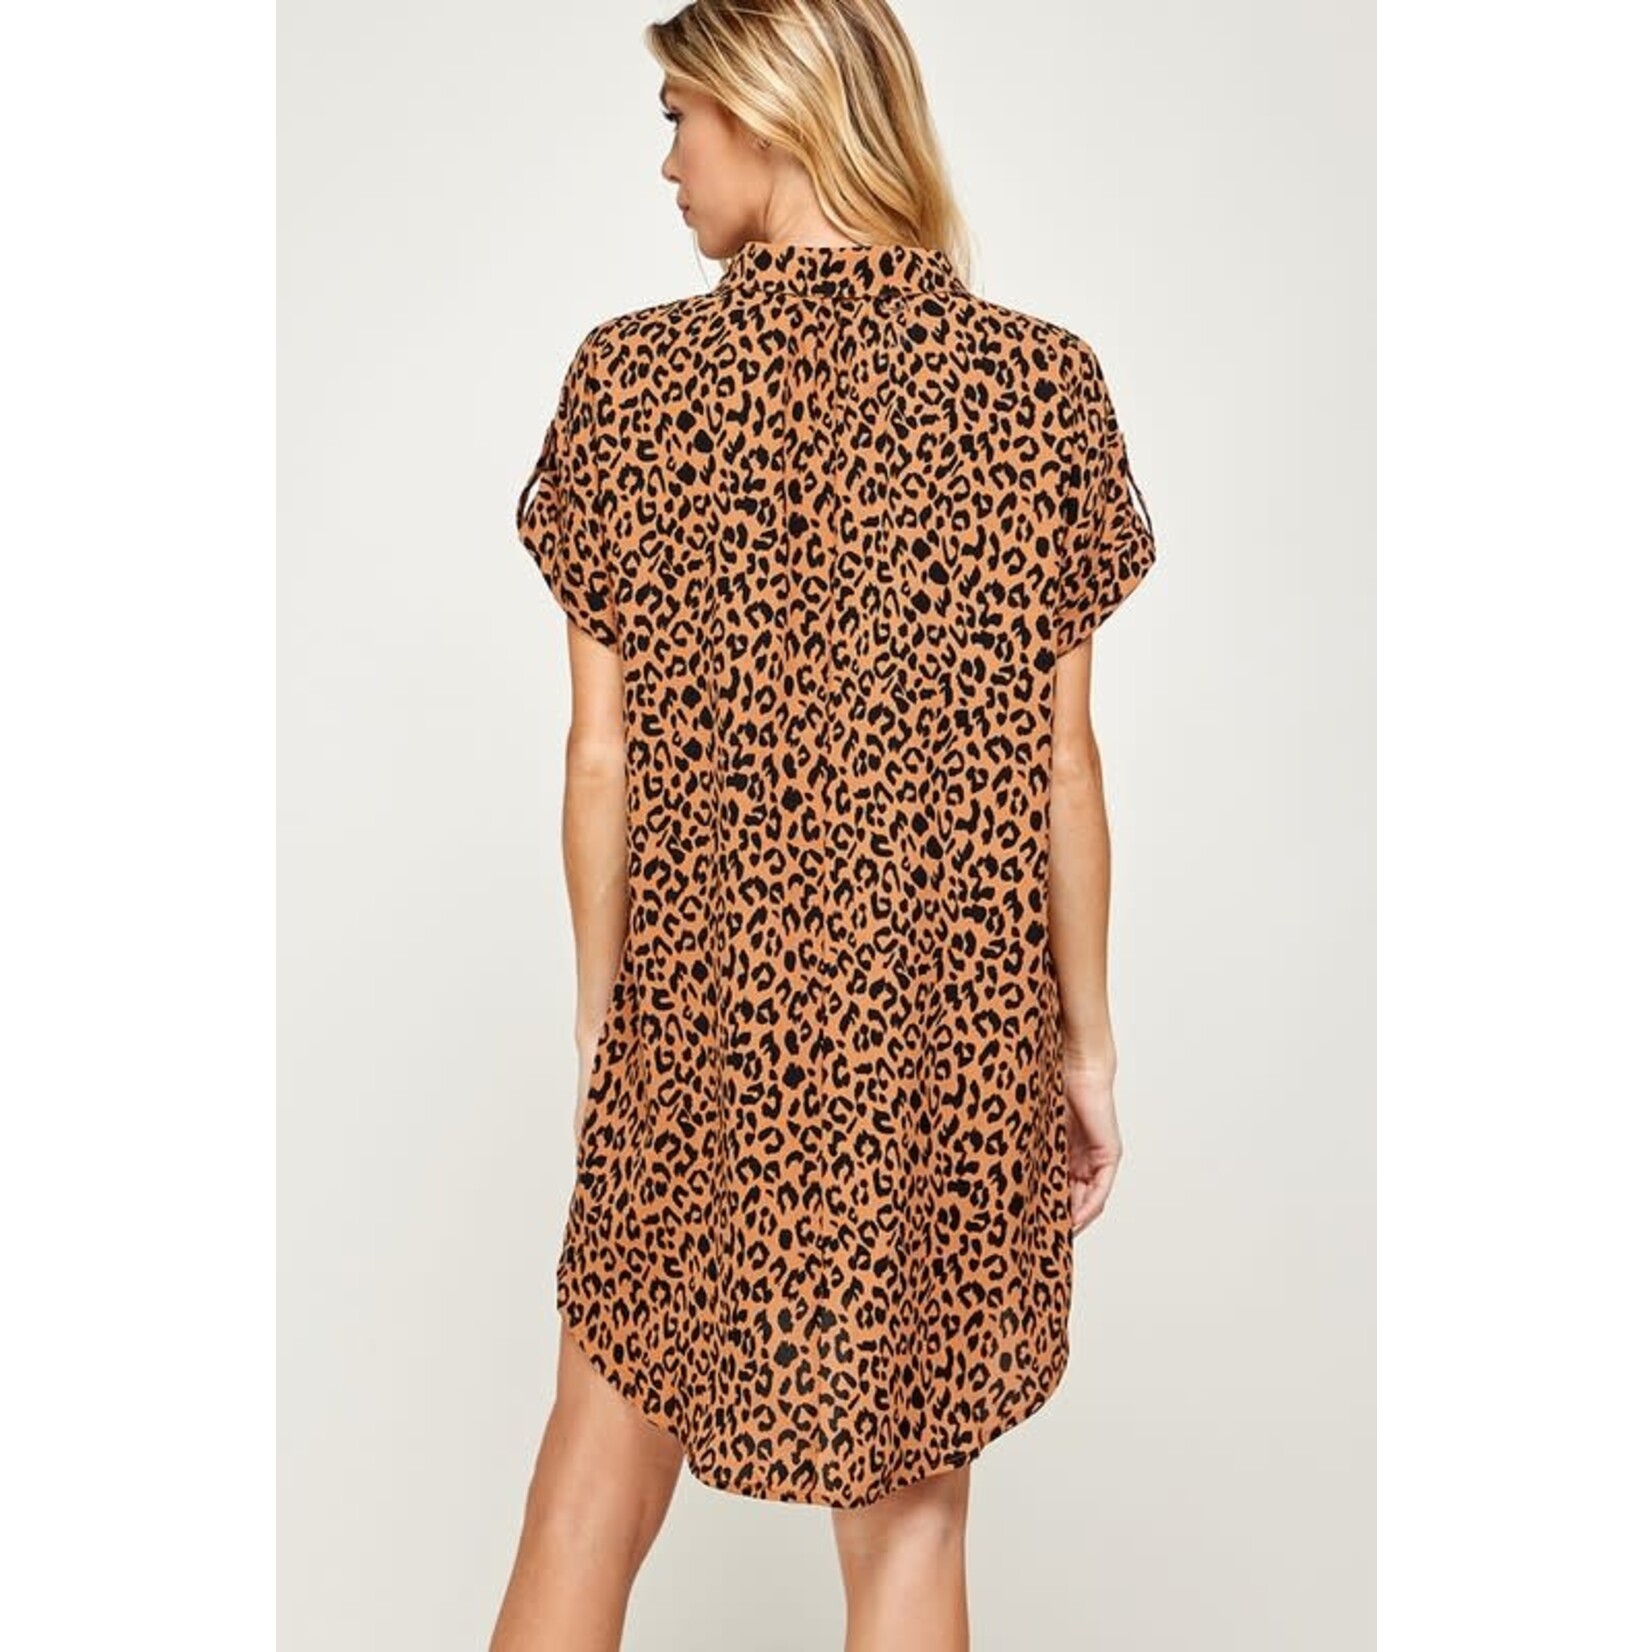 Leopard print collared short dress